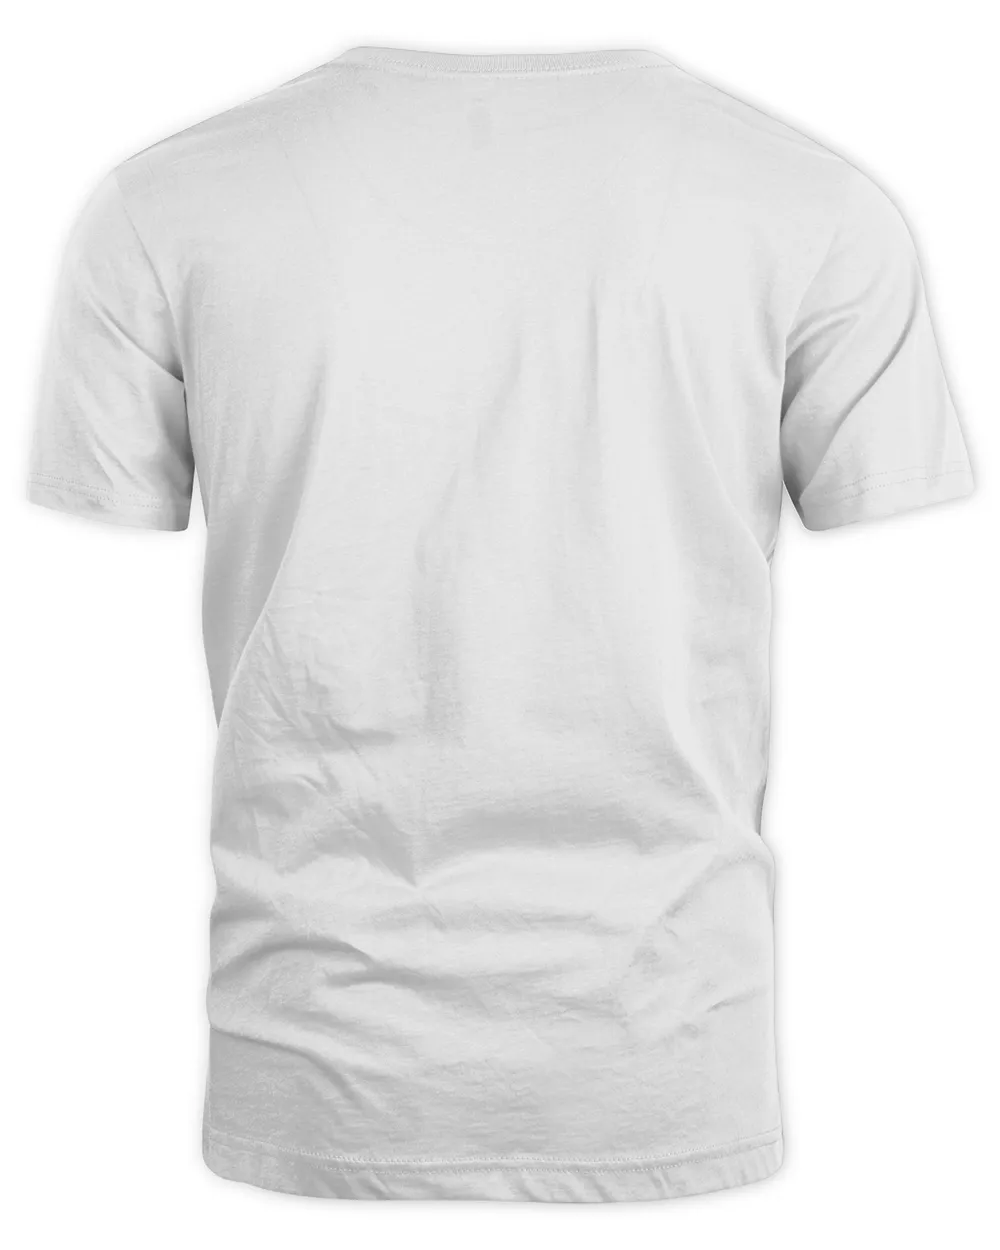 Viking T Shirt For men - Alway Heathen Never Savage